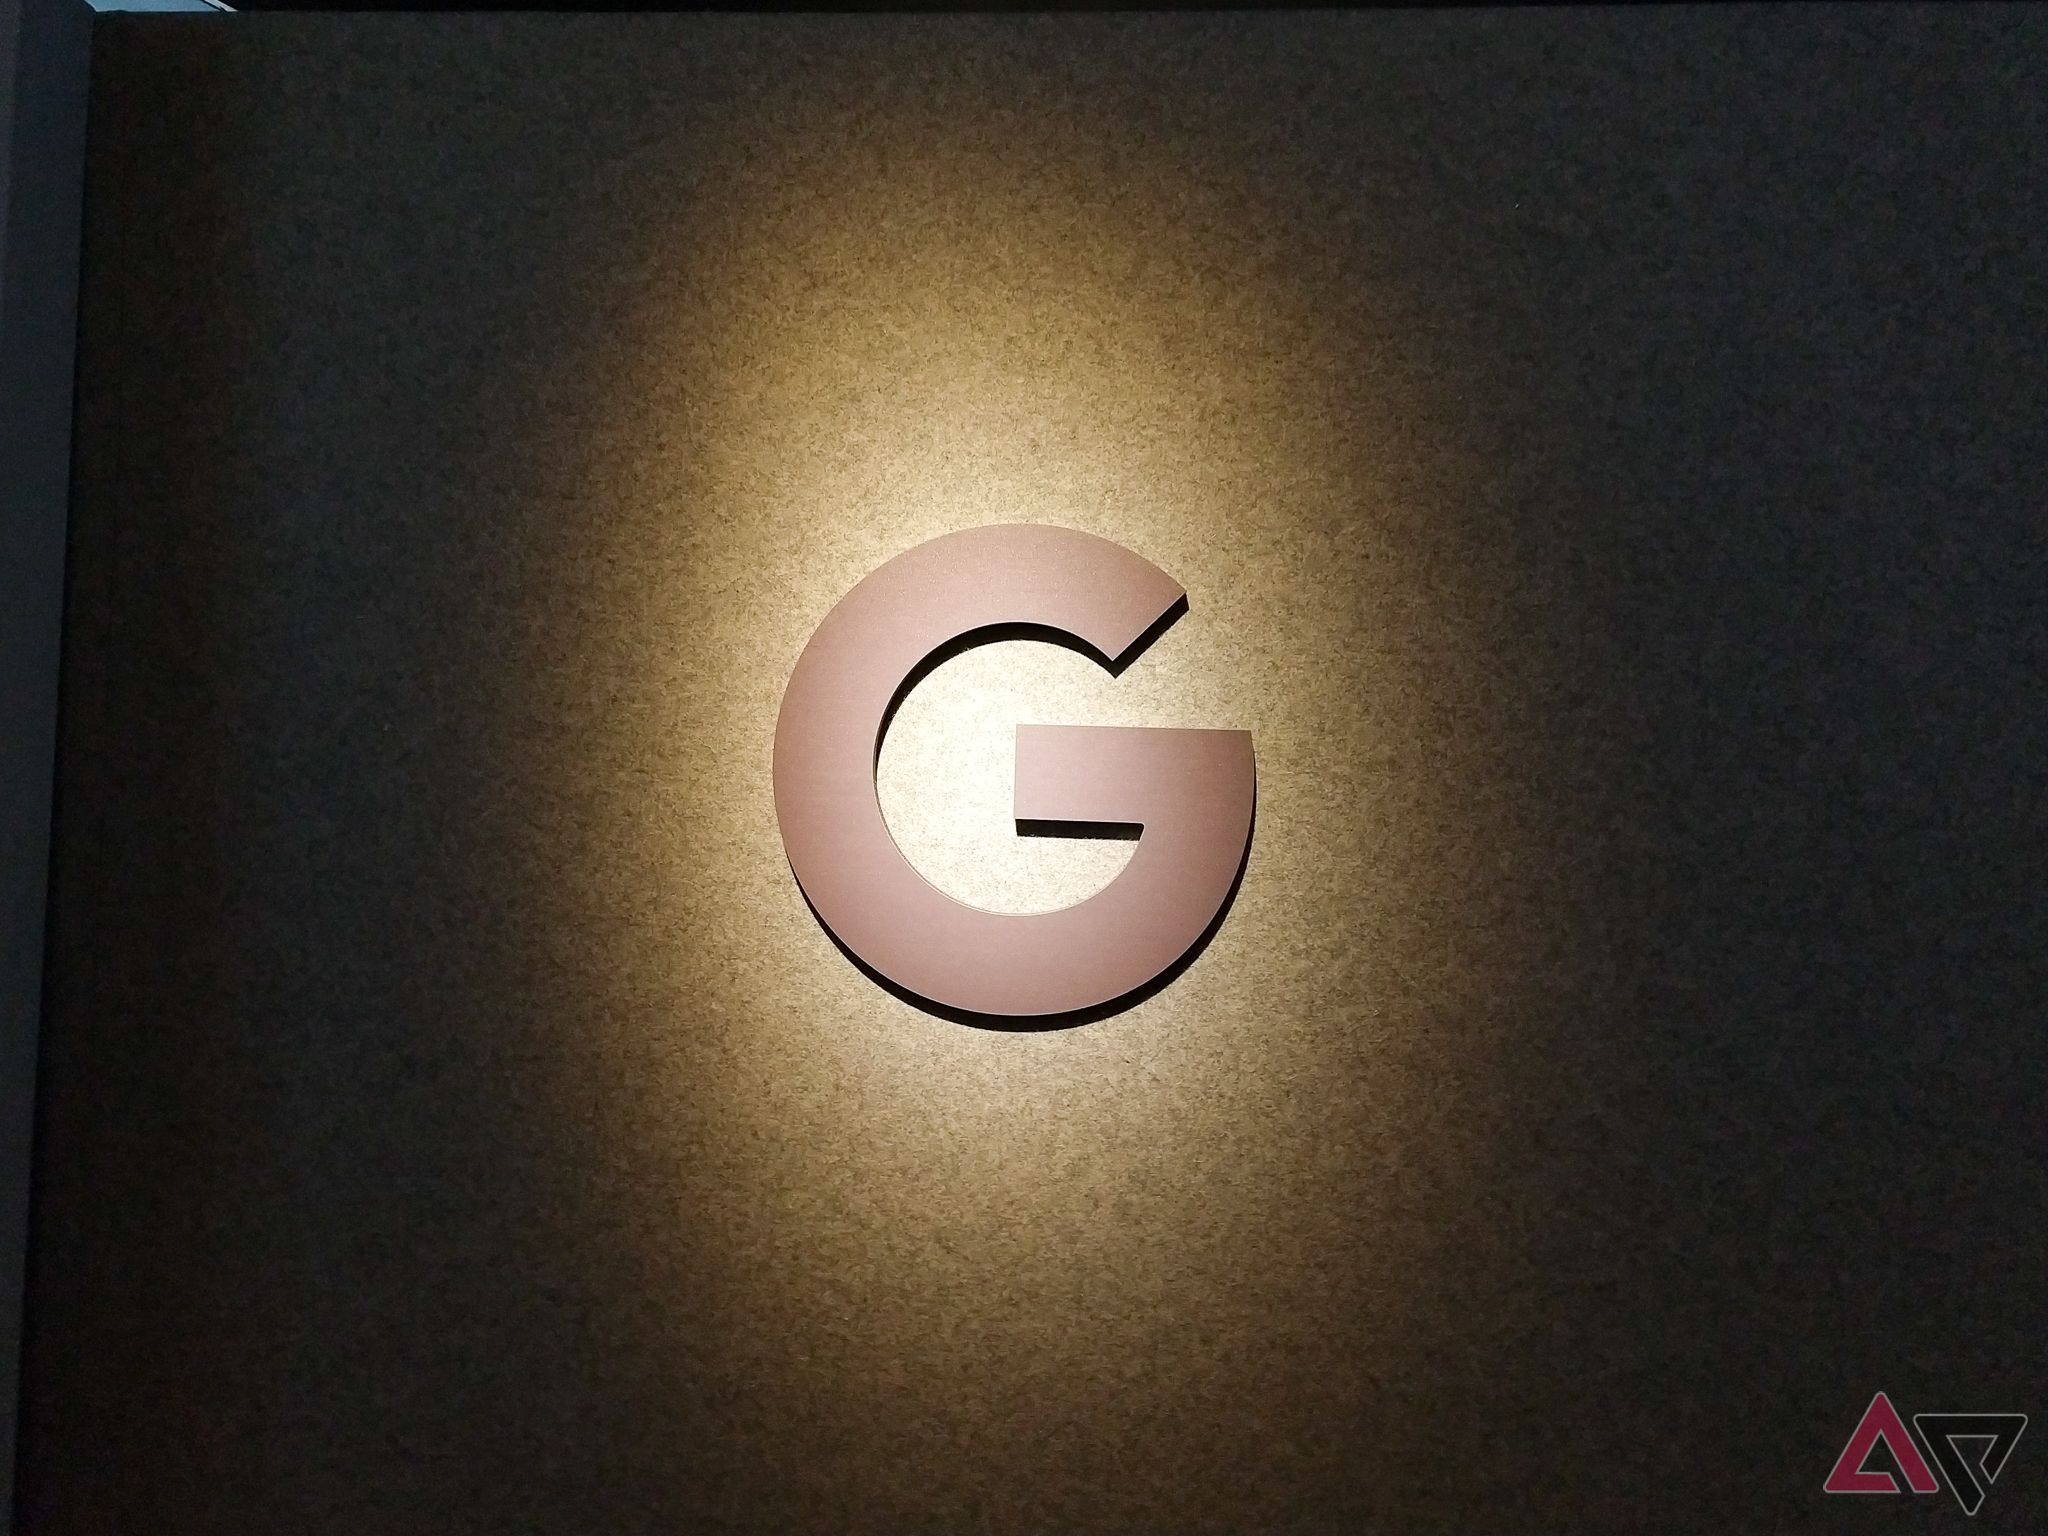 The Google lettermark under a spotlight